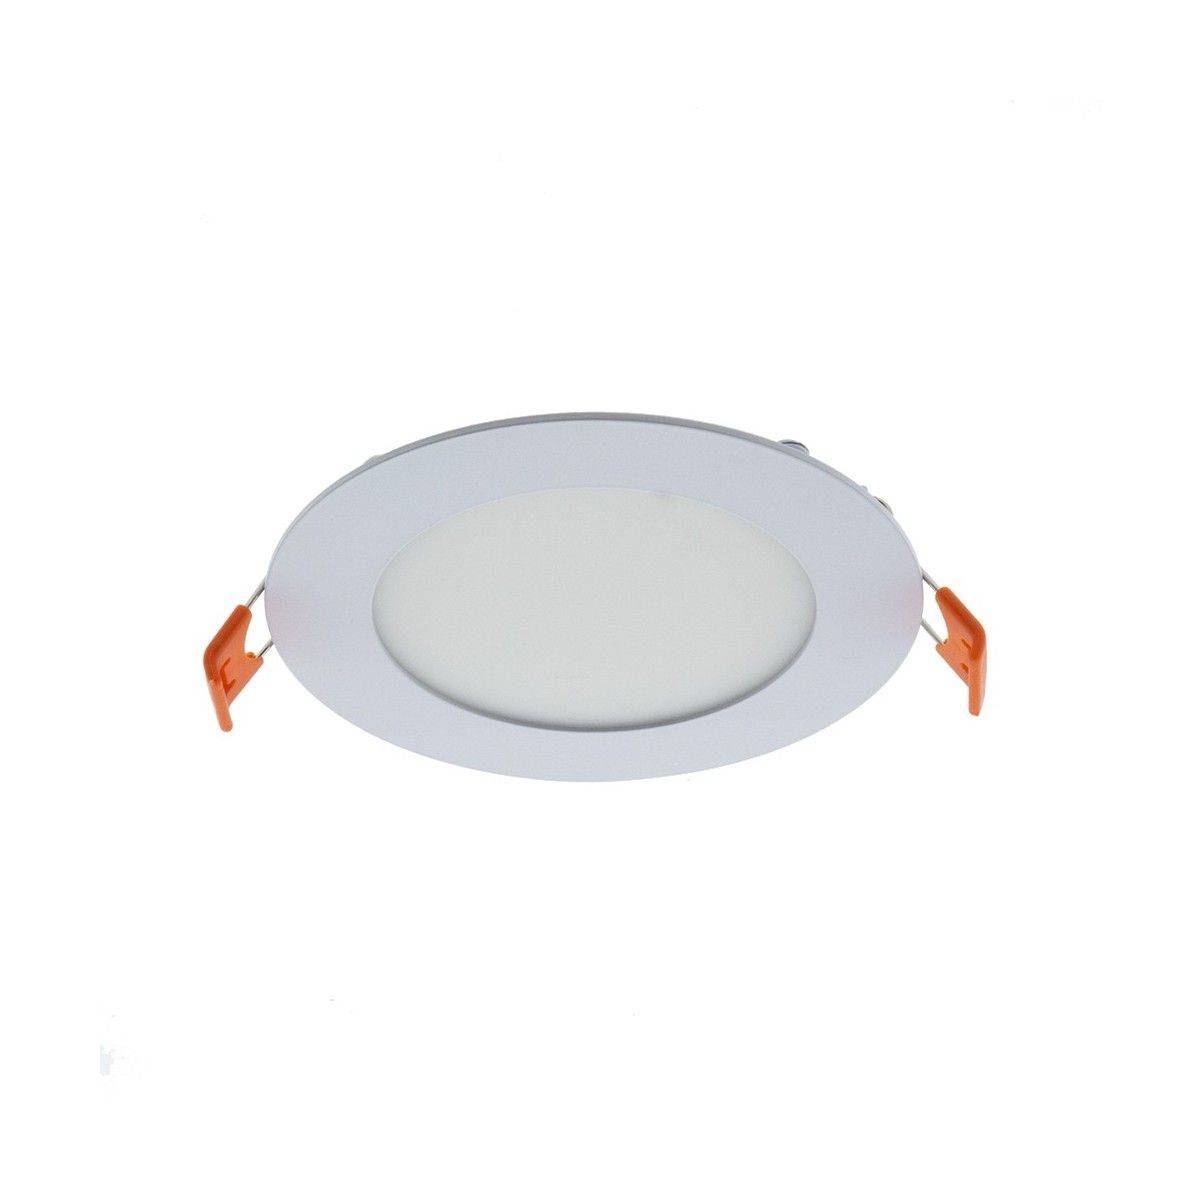 Recessed circular LED downlight 6W - 5 years warranty